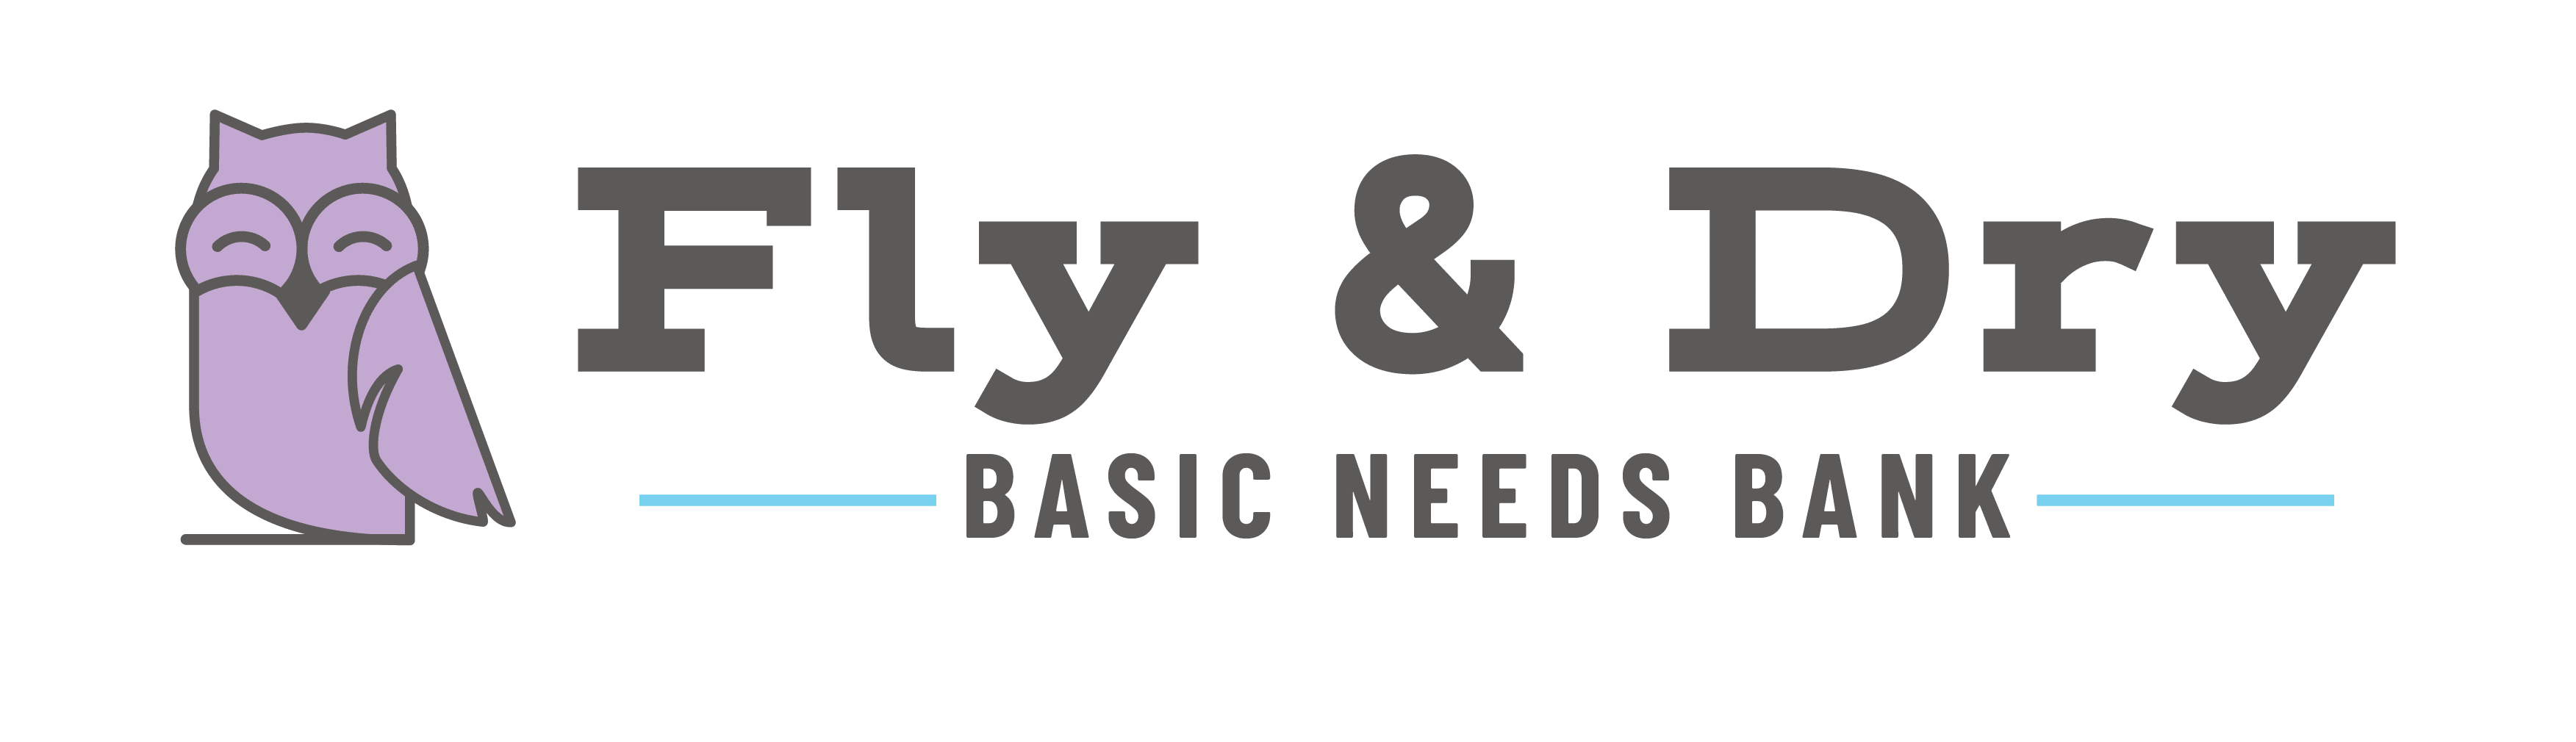 Fly and Dry Basic Needs Bank logo